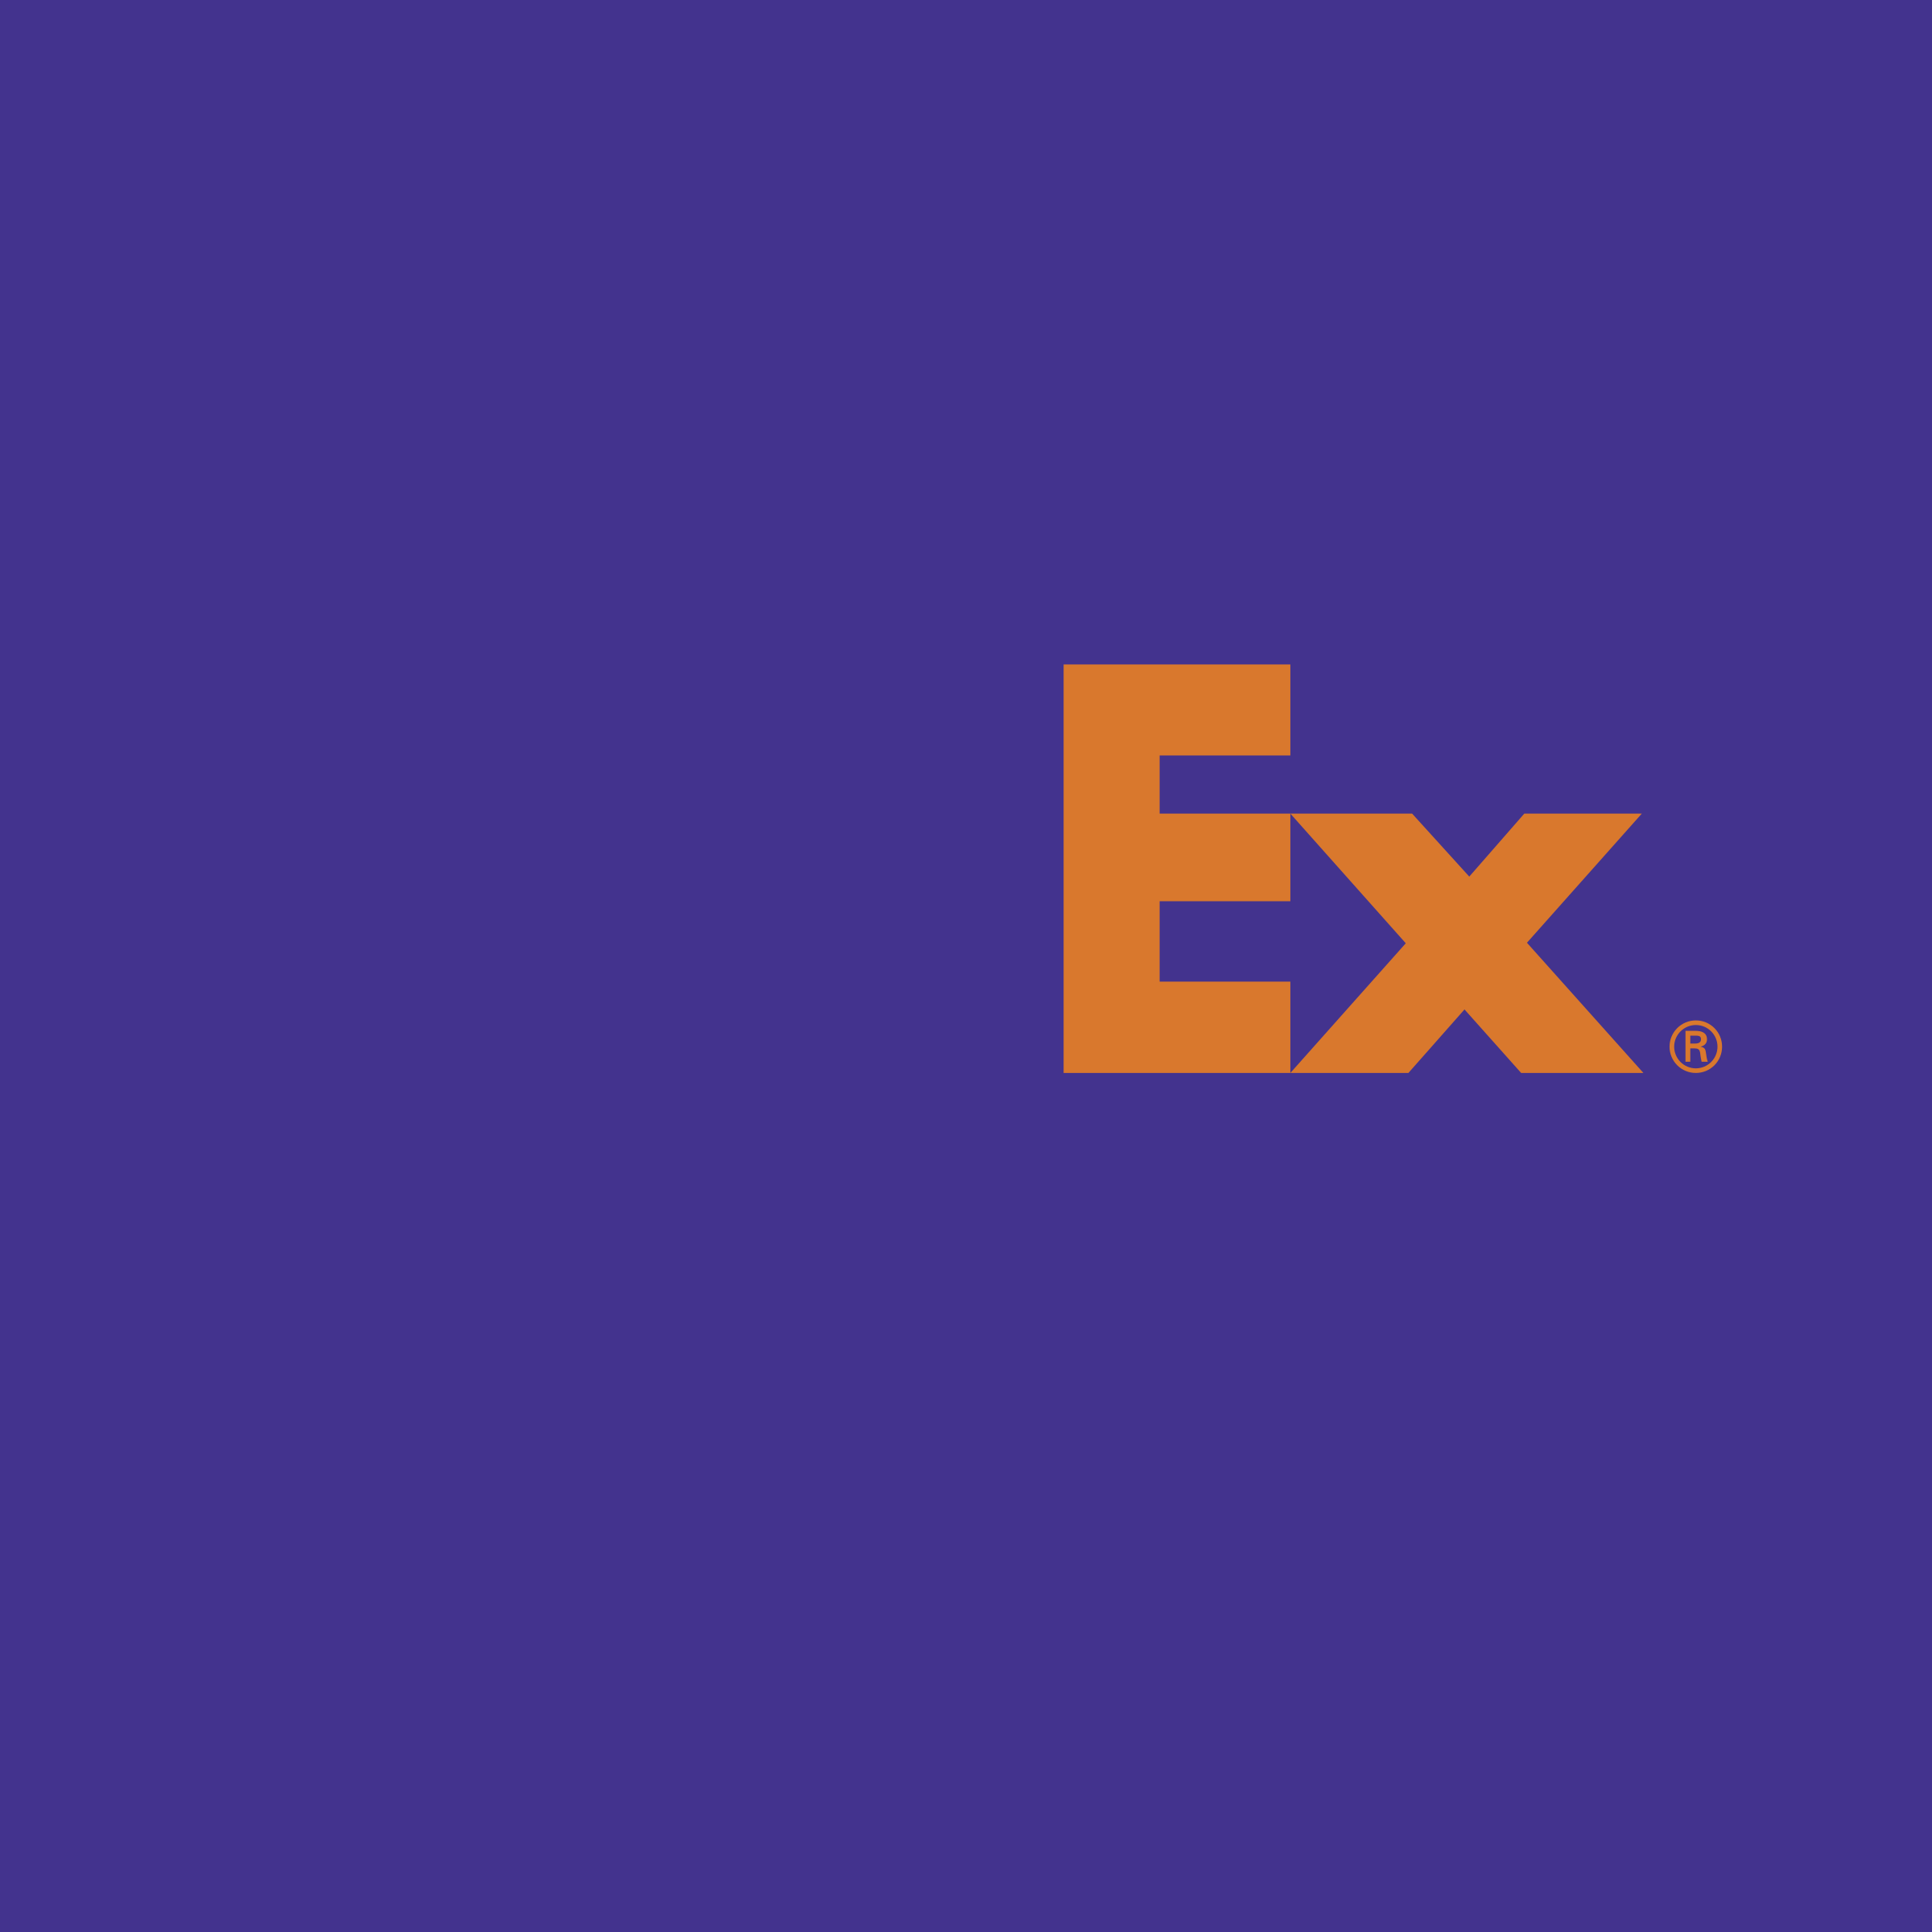 FedEx Express Logo - FedEx Express Logo PNG Transparent & SVG Vector - Freebie Supply